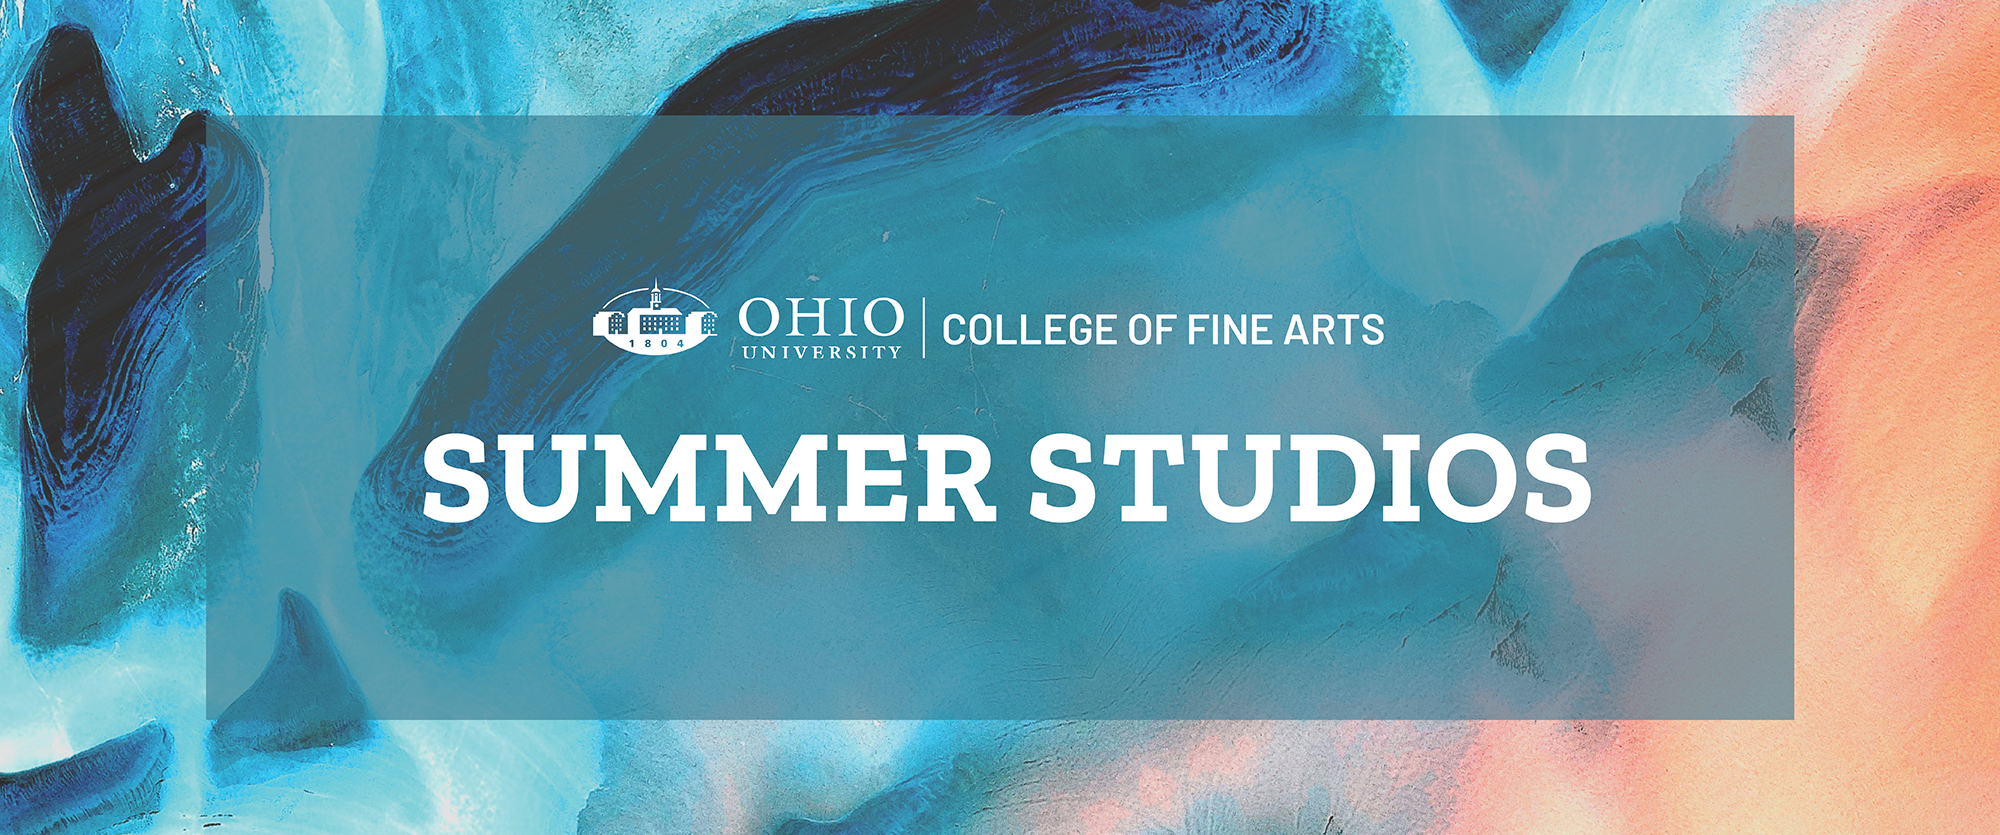 Summer Studios Ohio University